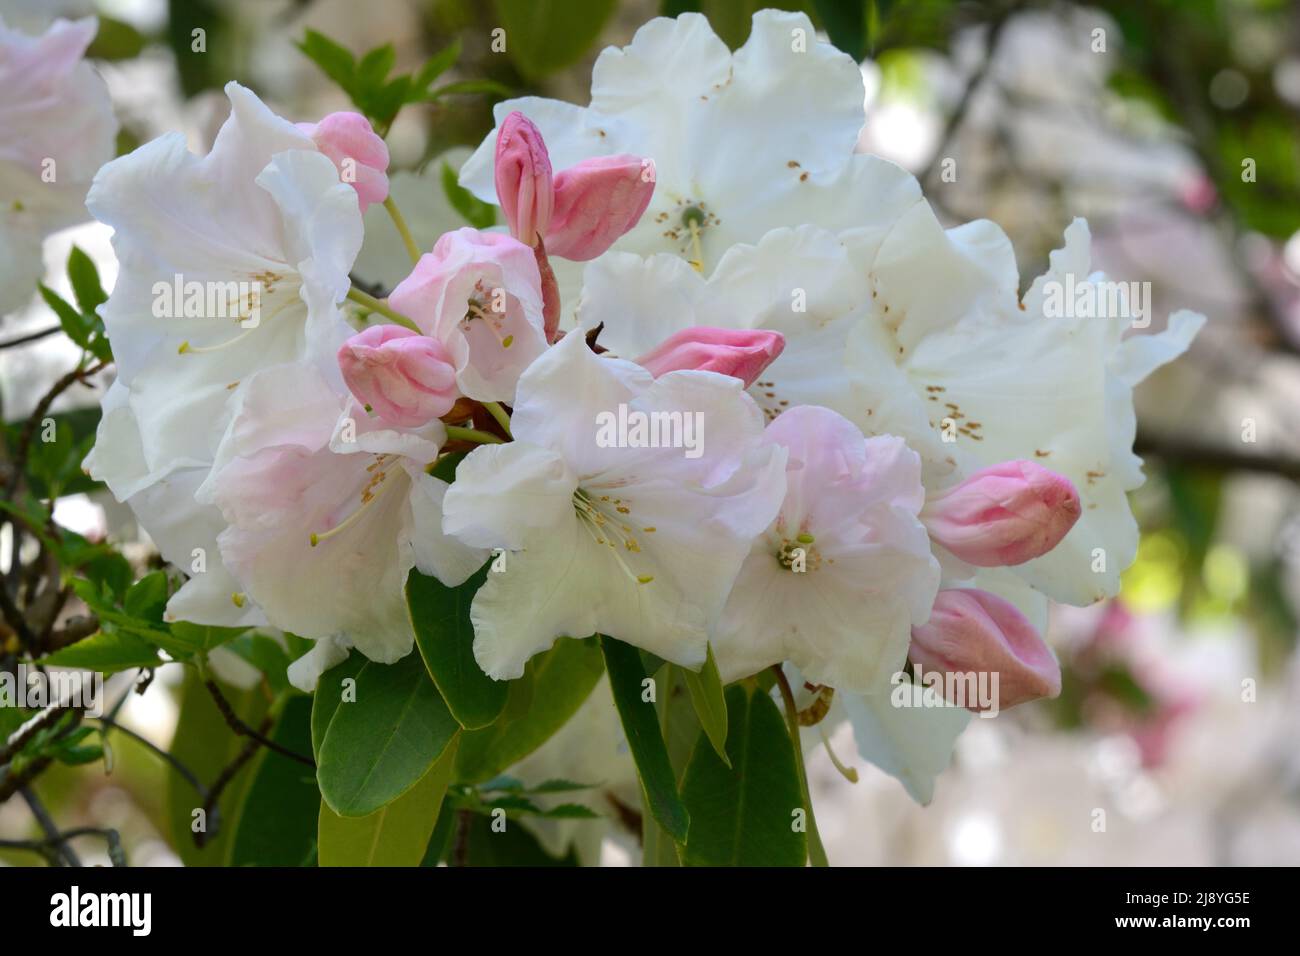 Rhododendron Loden King George Grandes brotes perfumados de color rosa que se abren a flores blancas Foto de stock